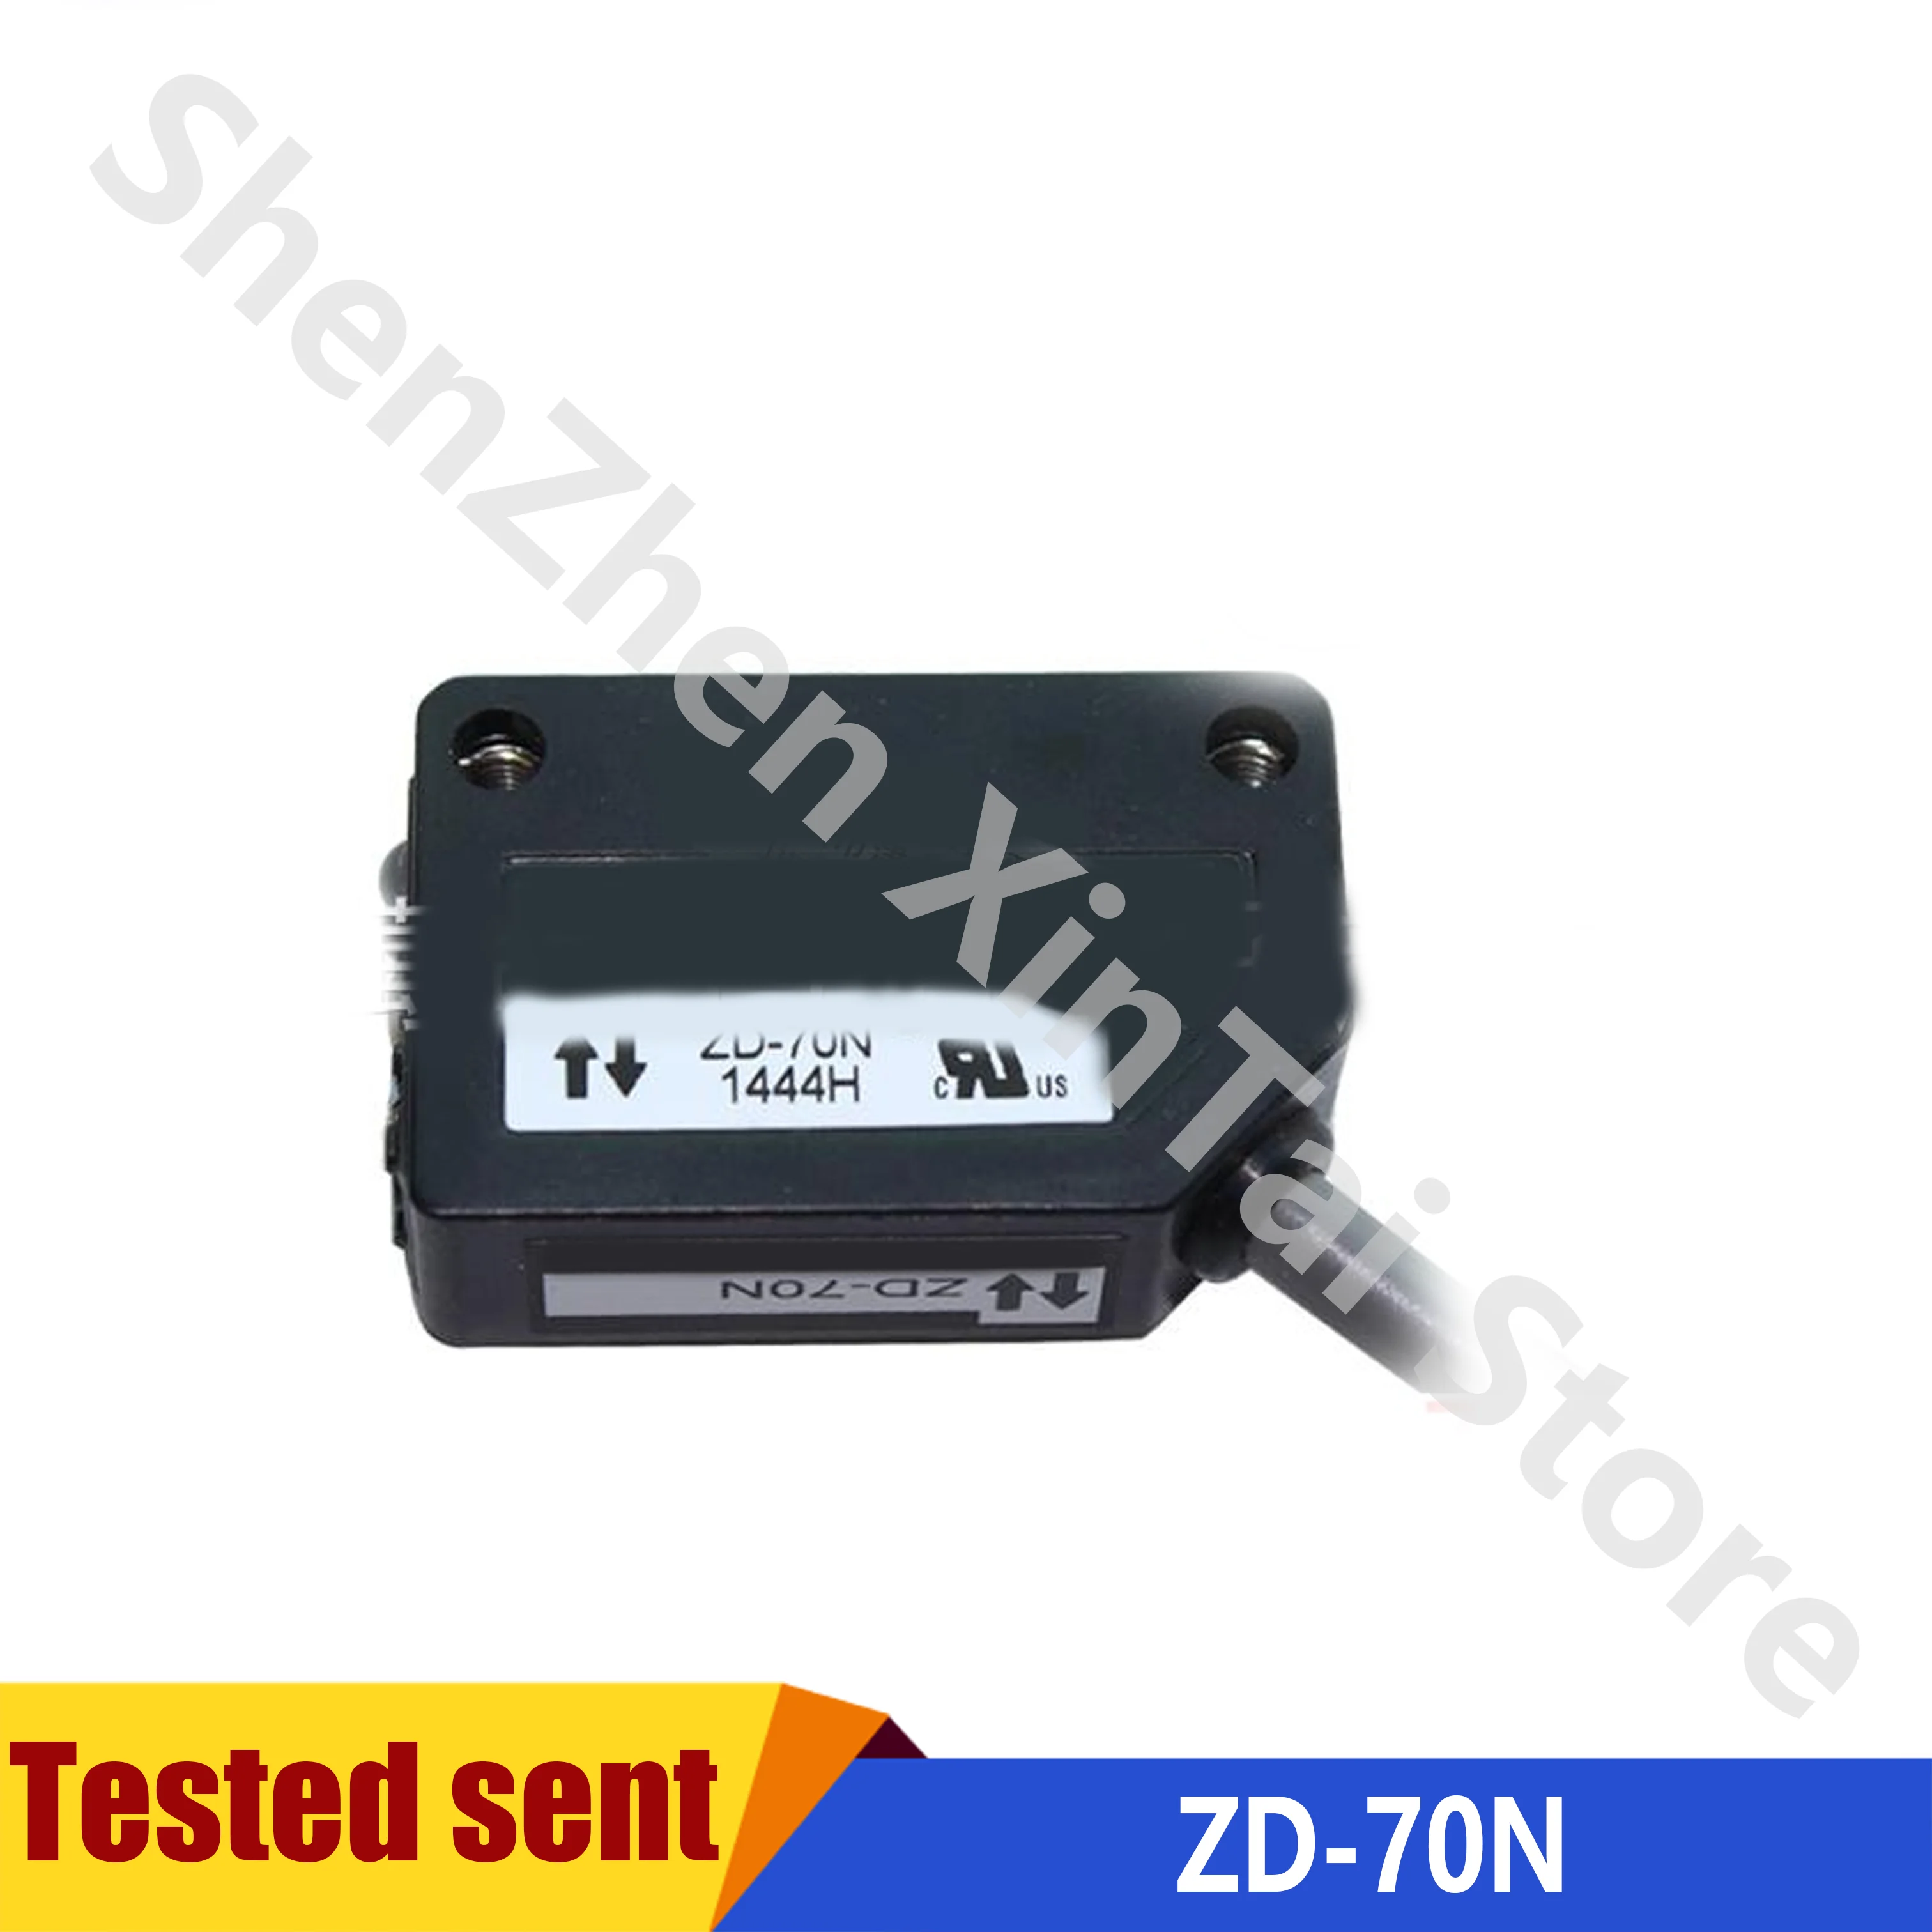 

New Original ZD-70N Photoelectric Switch Sensors